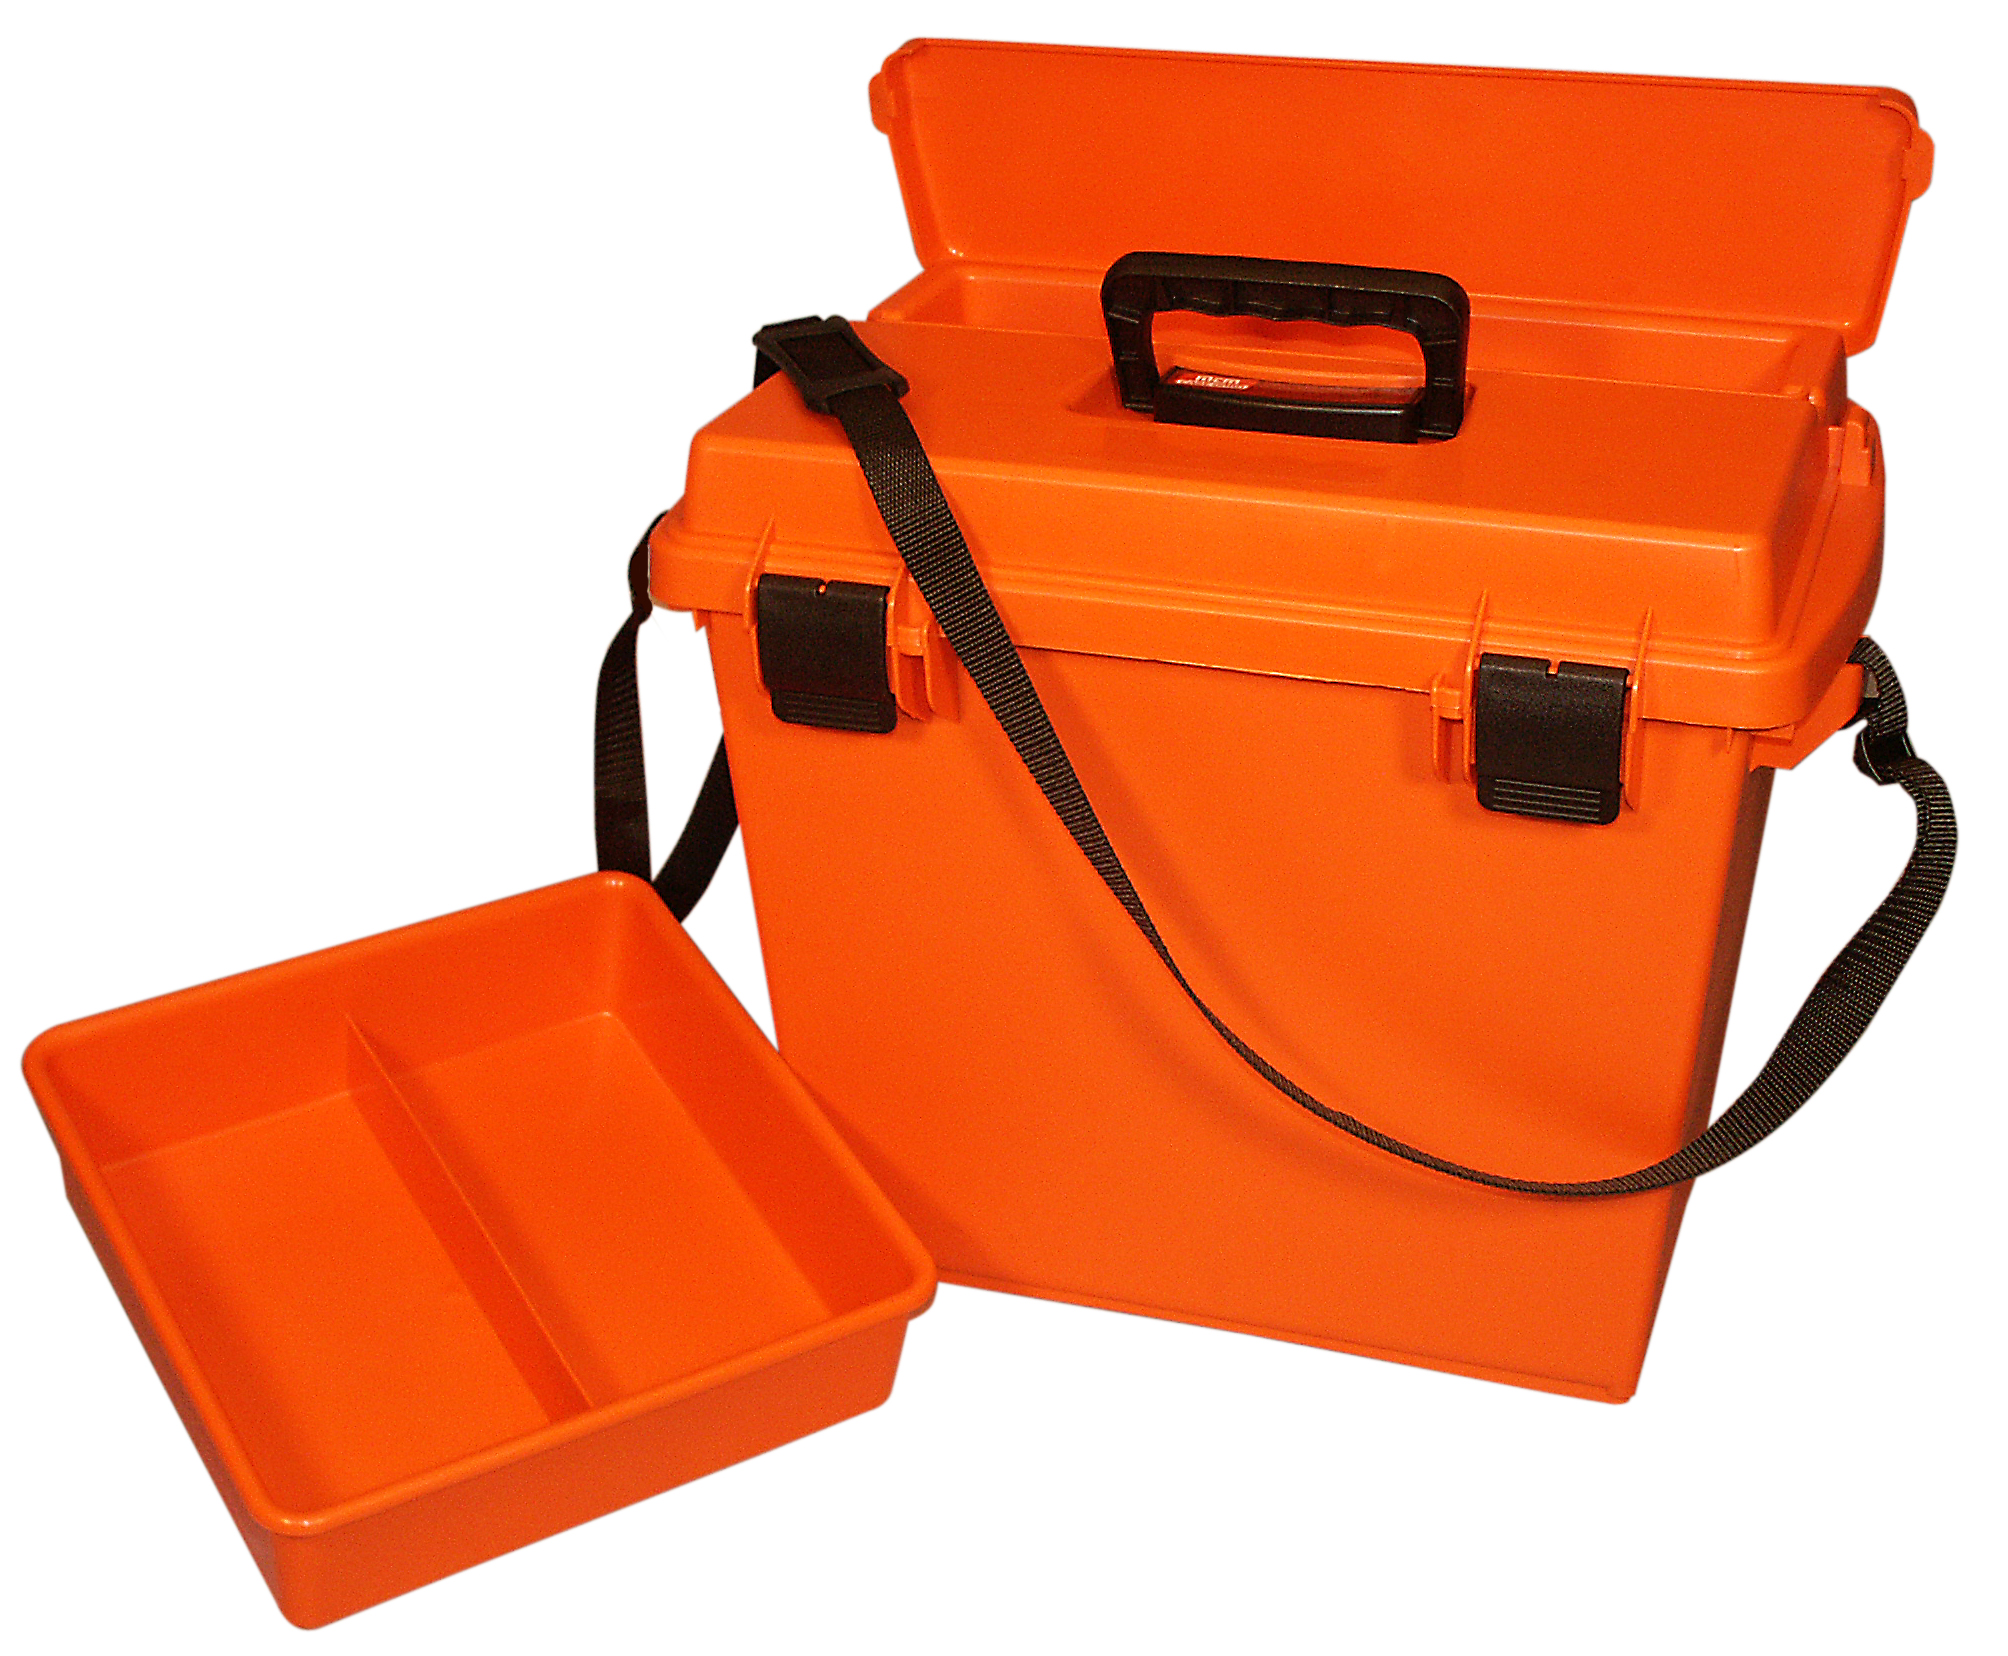 What's better than an orange box? An orange box with blue inside 🍊💙M